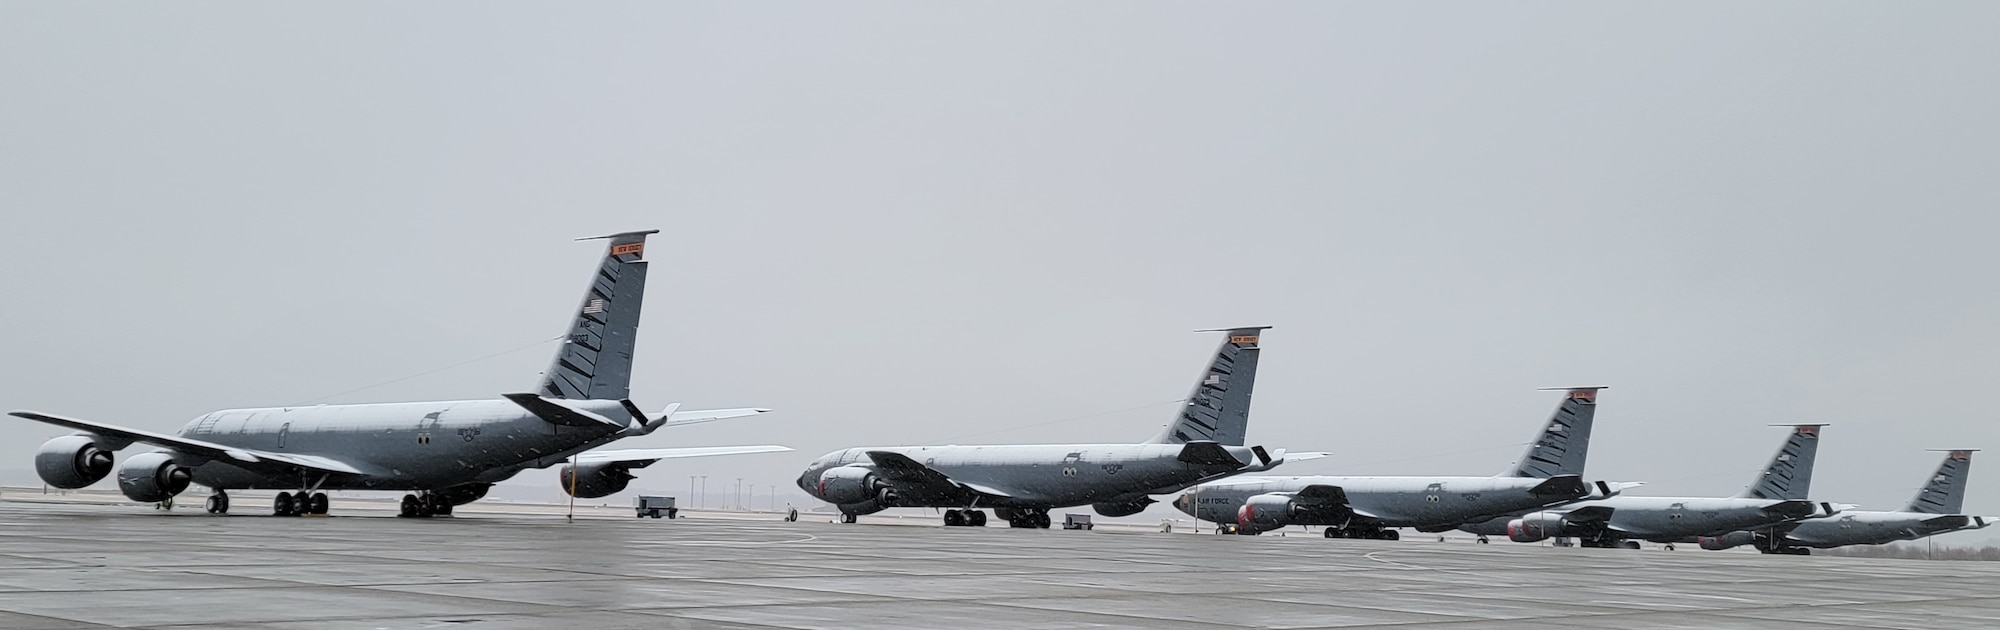 KC-135R Stratotankers sit on parking ramp at Joint Base McGuire-Dix-Lakehurst, N.J.